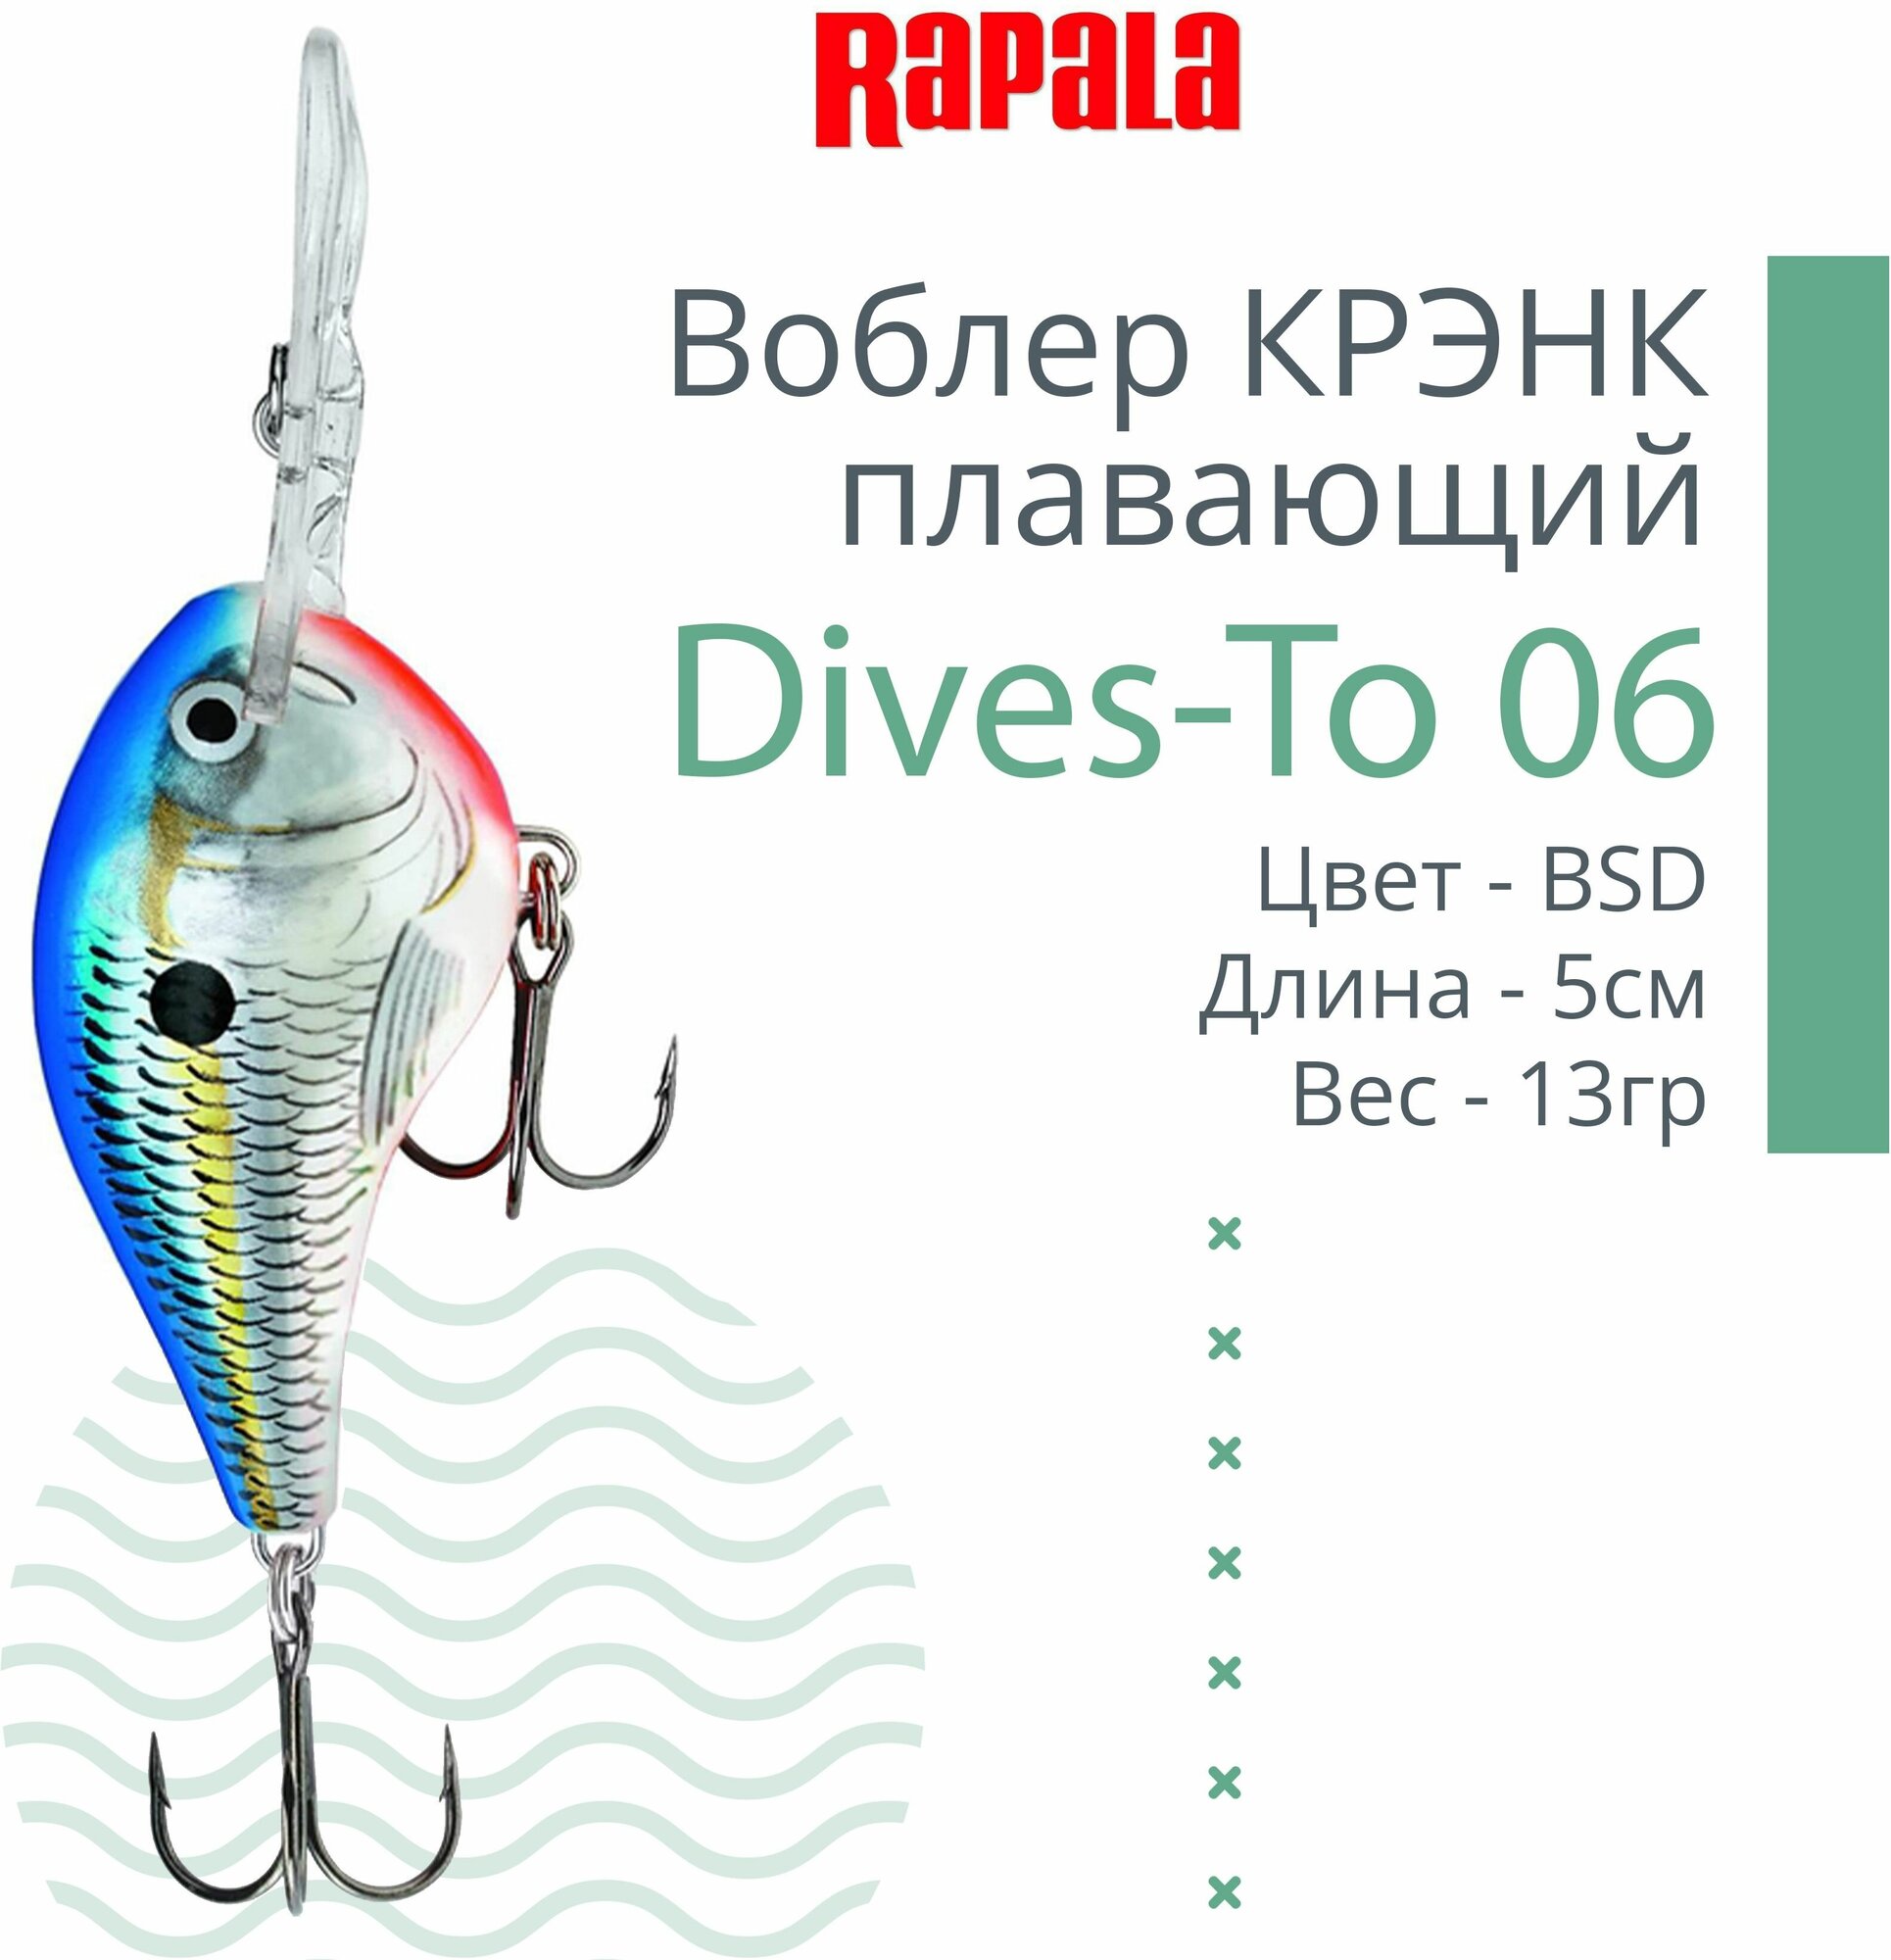 Воблер для рыбалки RAPALA Dives-To 06, 5см, 13гр, цвет BSD , плавающий